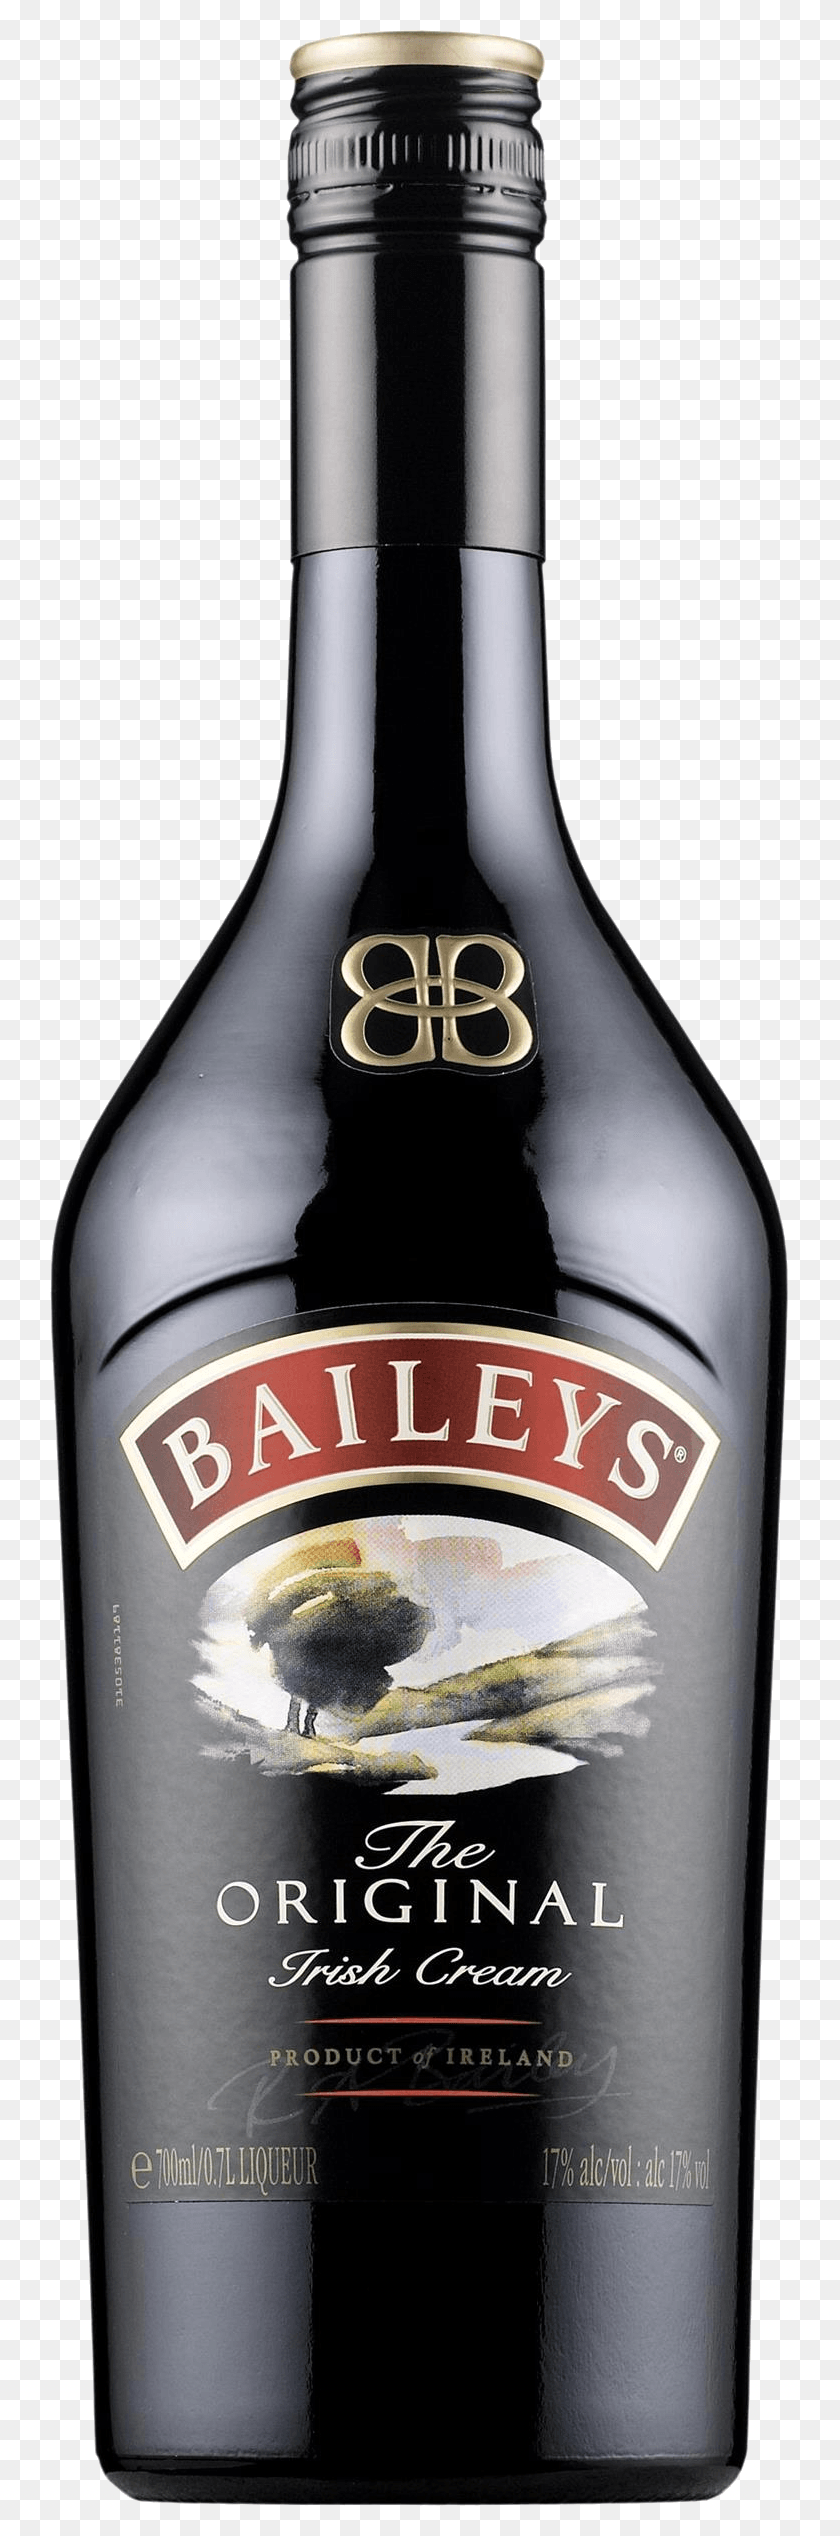 739x2476 Descargar Png / Baileys Original Irish Cream Baileys Licor, Cerveza, Alcohol, Bebidas Hd Png